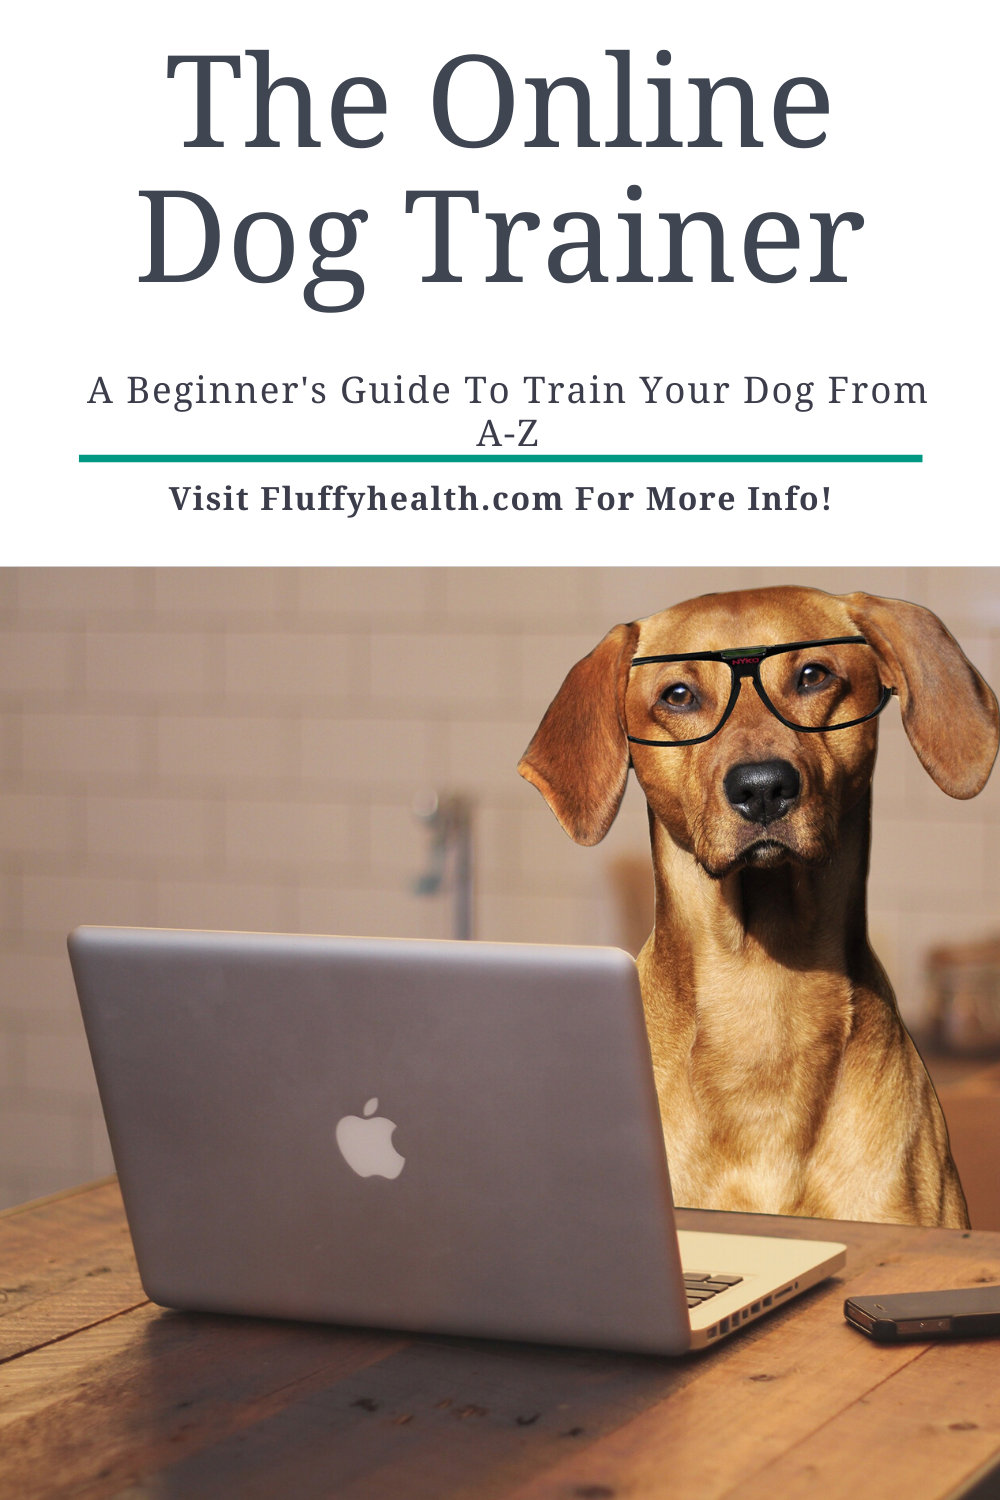 Doggy-Dans-Online-Dog-Trainer